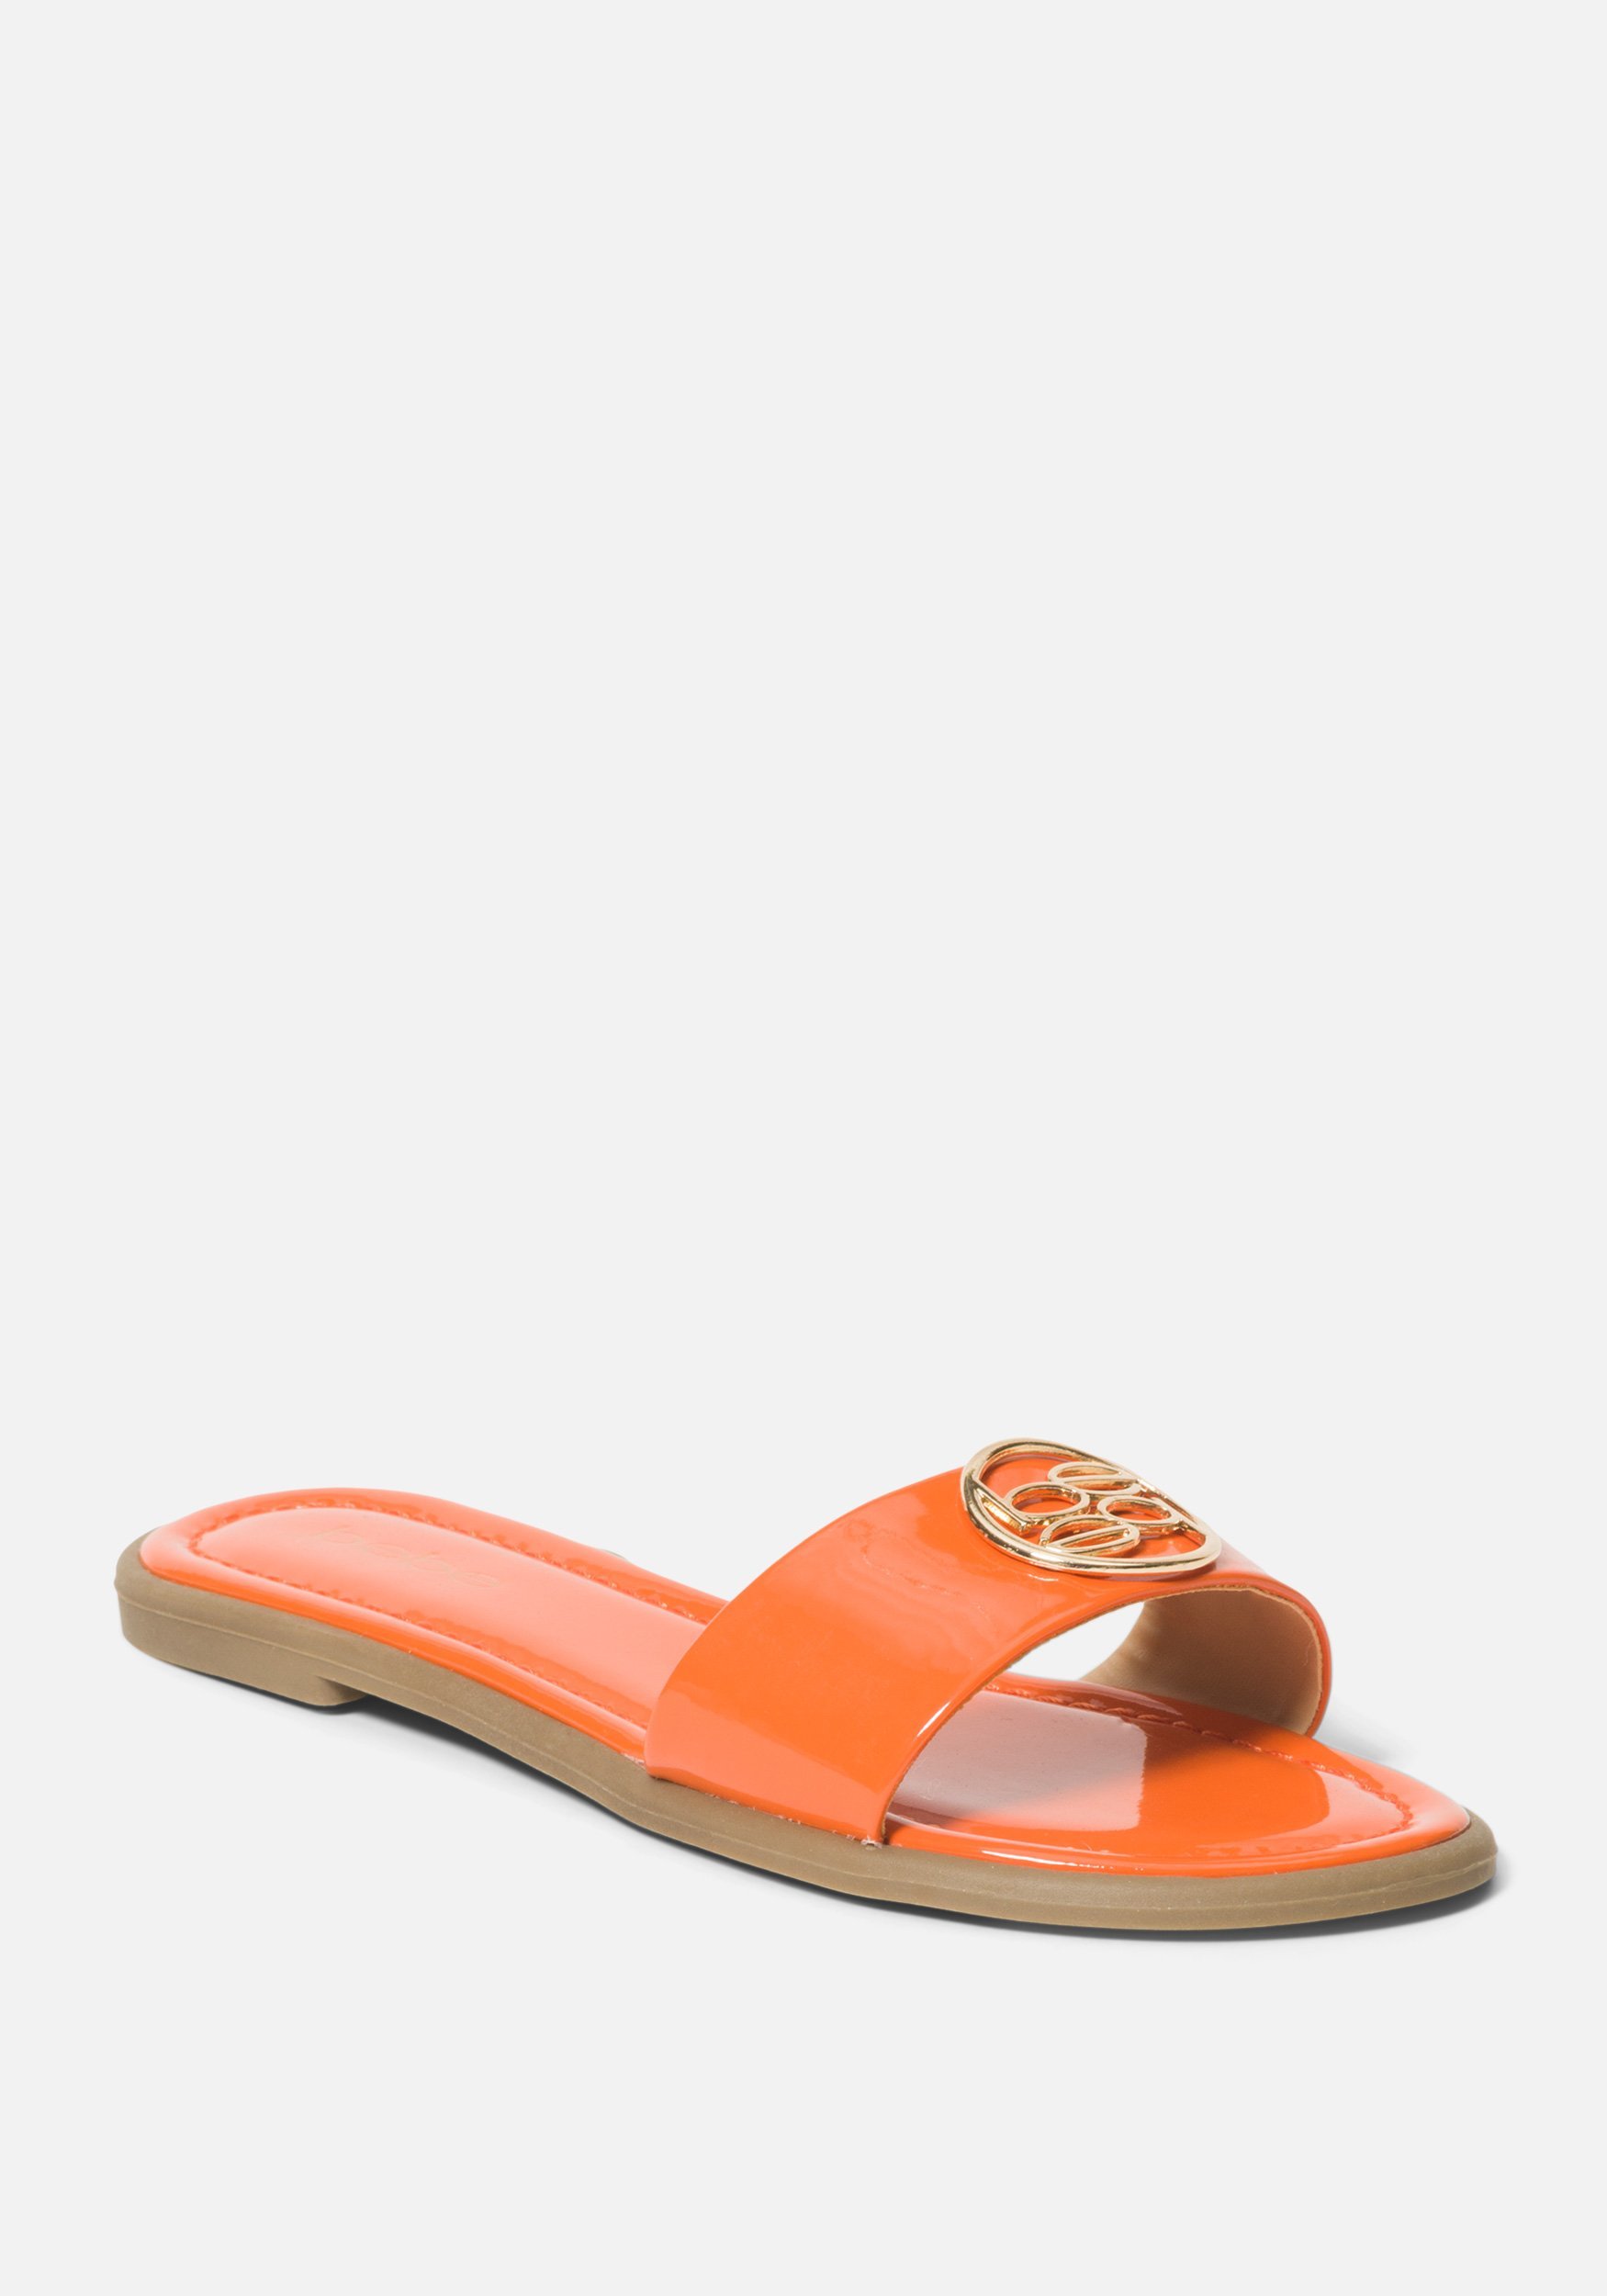 Bebe Women's Leone Slides Shoe, Size 11 in DARK ORANGE Synthetic